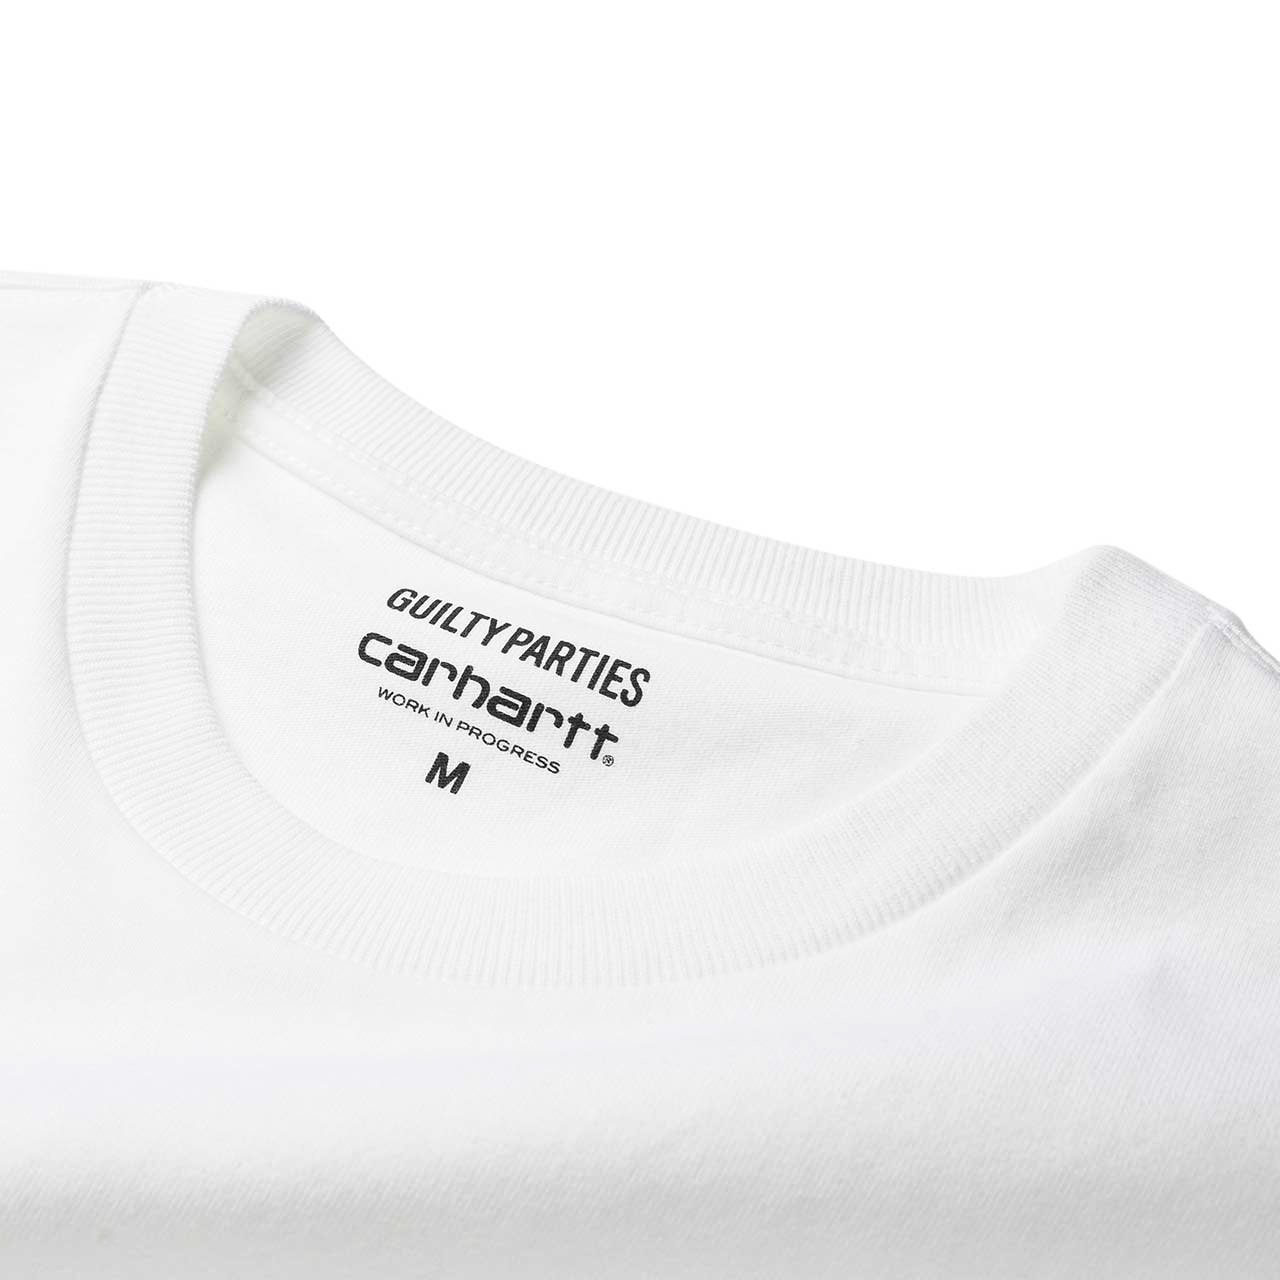 carhartt wip x wacko maria american script t-shirt (white) - i028249.0d7.00.03 - a.plus - Image - 3